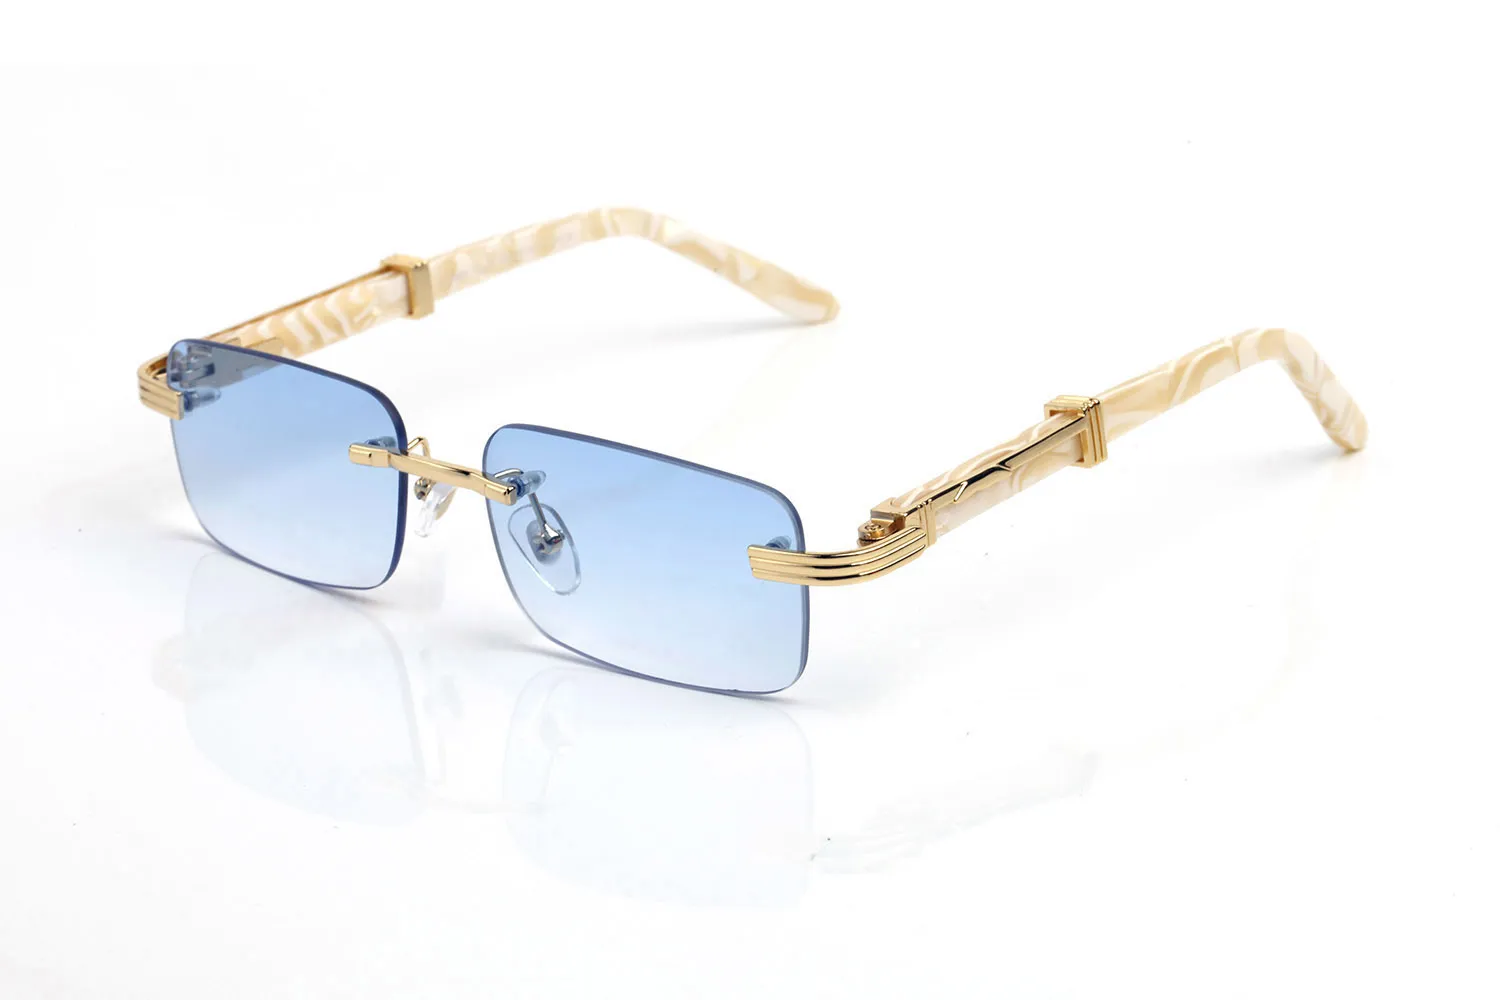 Rimless White Buffalo Horn Sunglasses For Men Brand Design Glasses Wood Frame Wave Gold Metal Eyeglasses Women Sport Fashion Eyewe230a